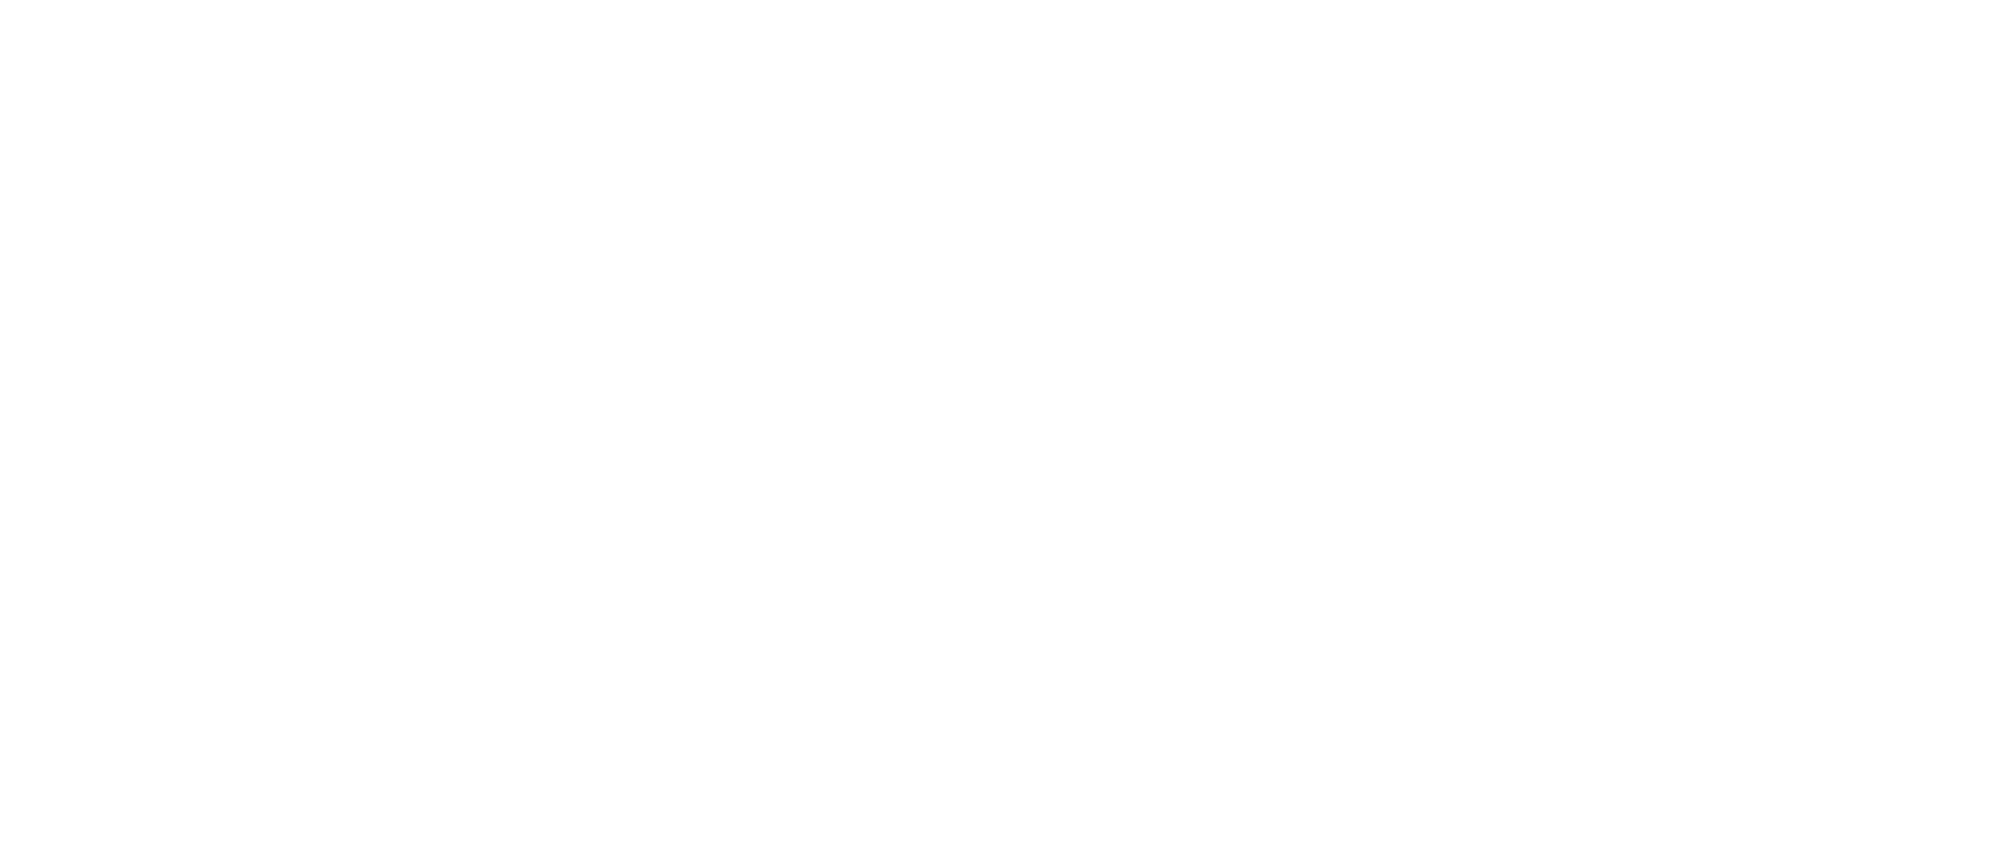 Humanity First Global Health logo